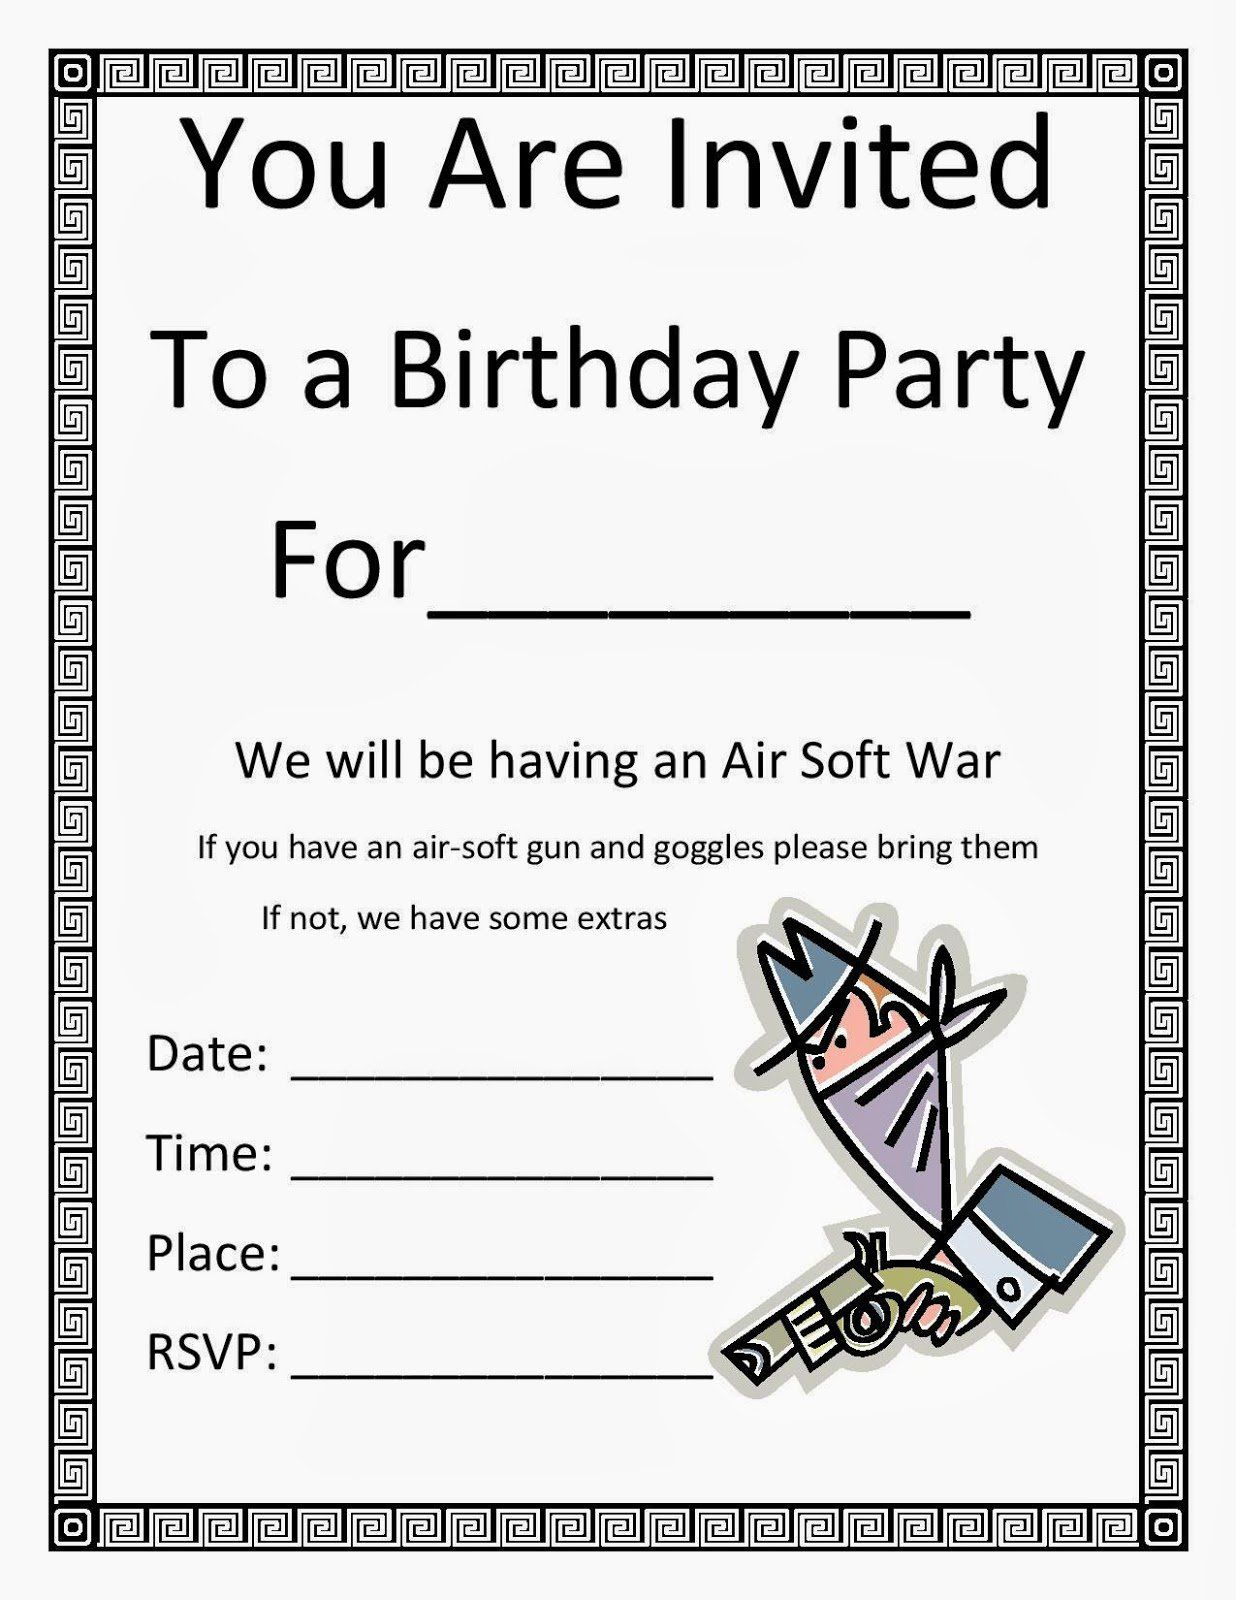 Birthday Party Invitation Templates Microsoft Word Within Birthday Card Template Microsoft Word